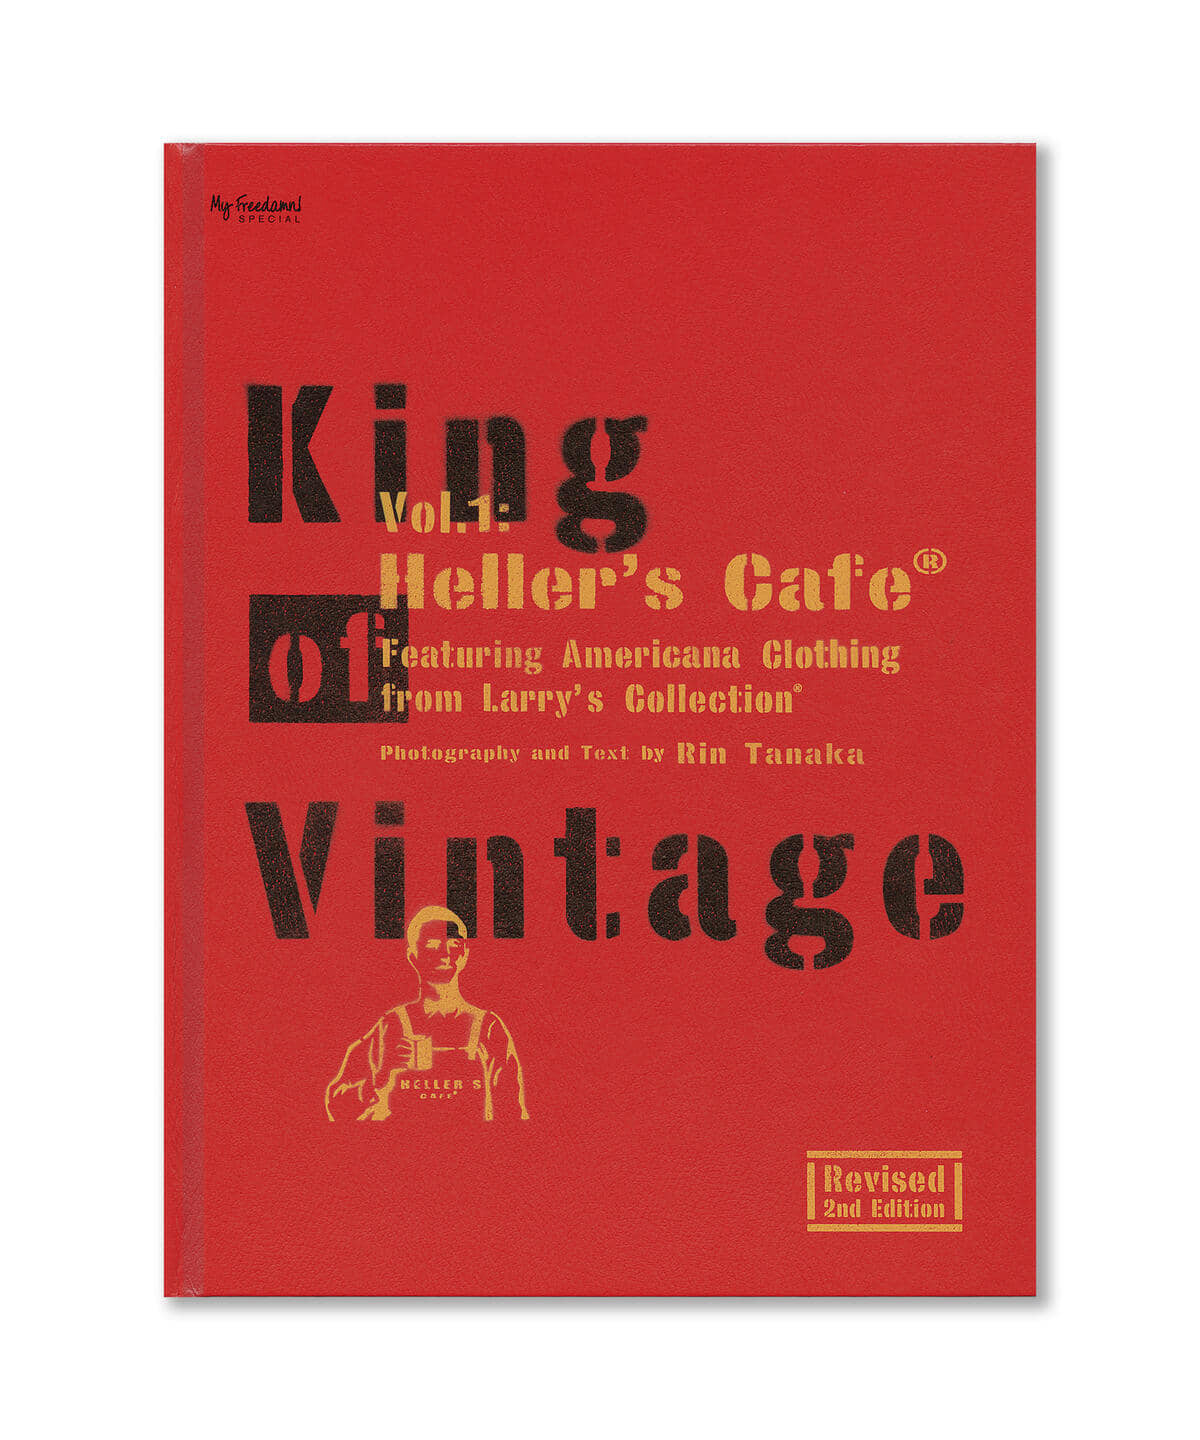 king of vintage(本)BOOK全158ページヴィンテージヘラーズカフェウエア ...